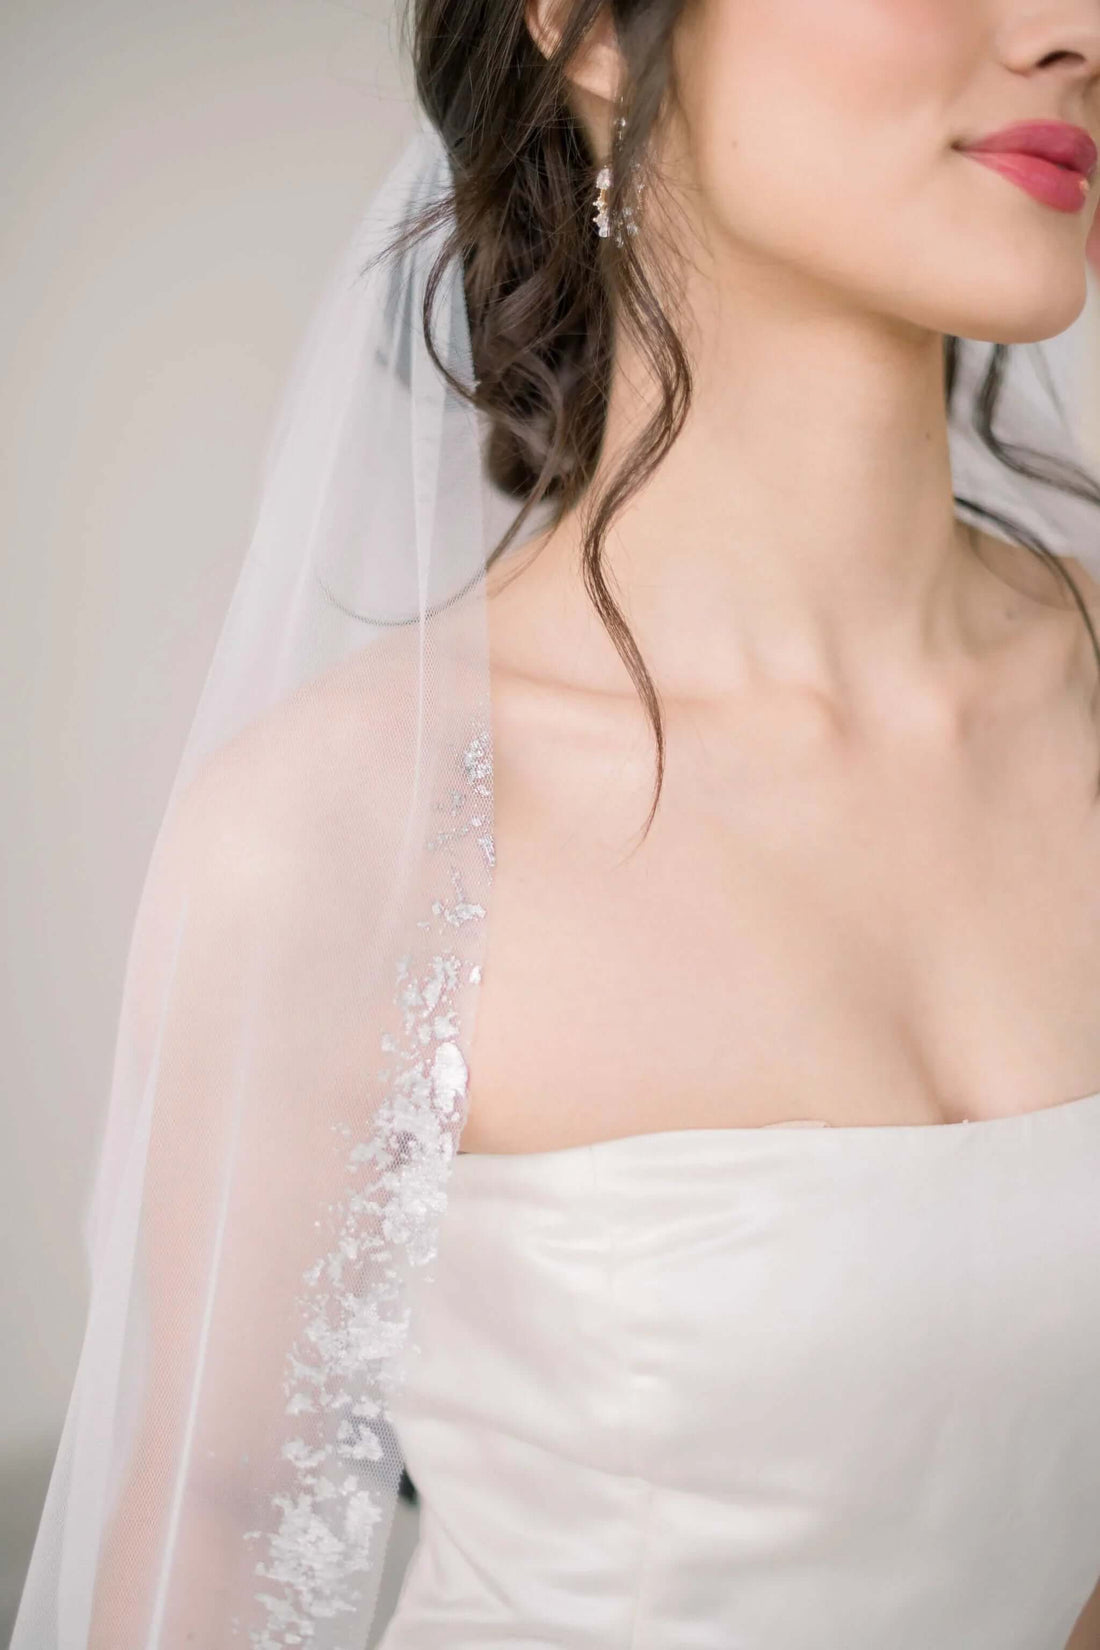 Wedding veil hairstyles for brides with thin hair Tessa Kim